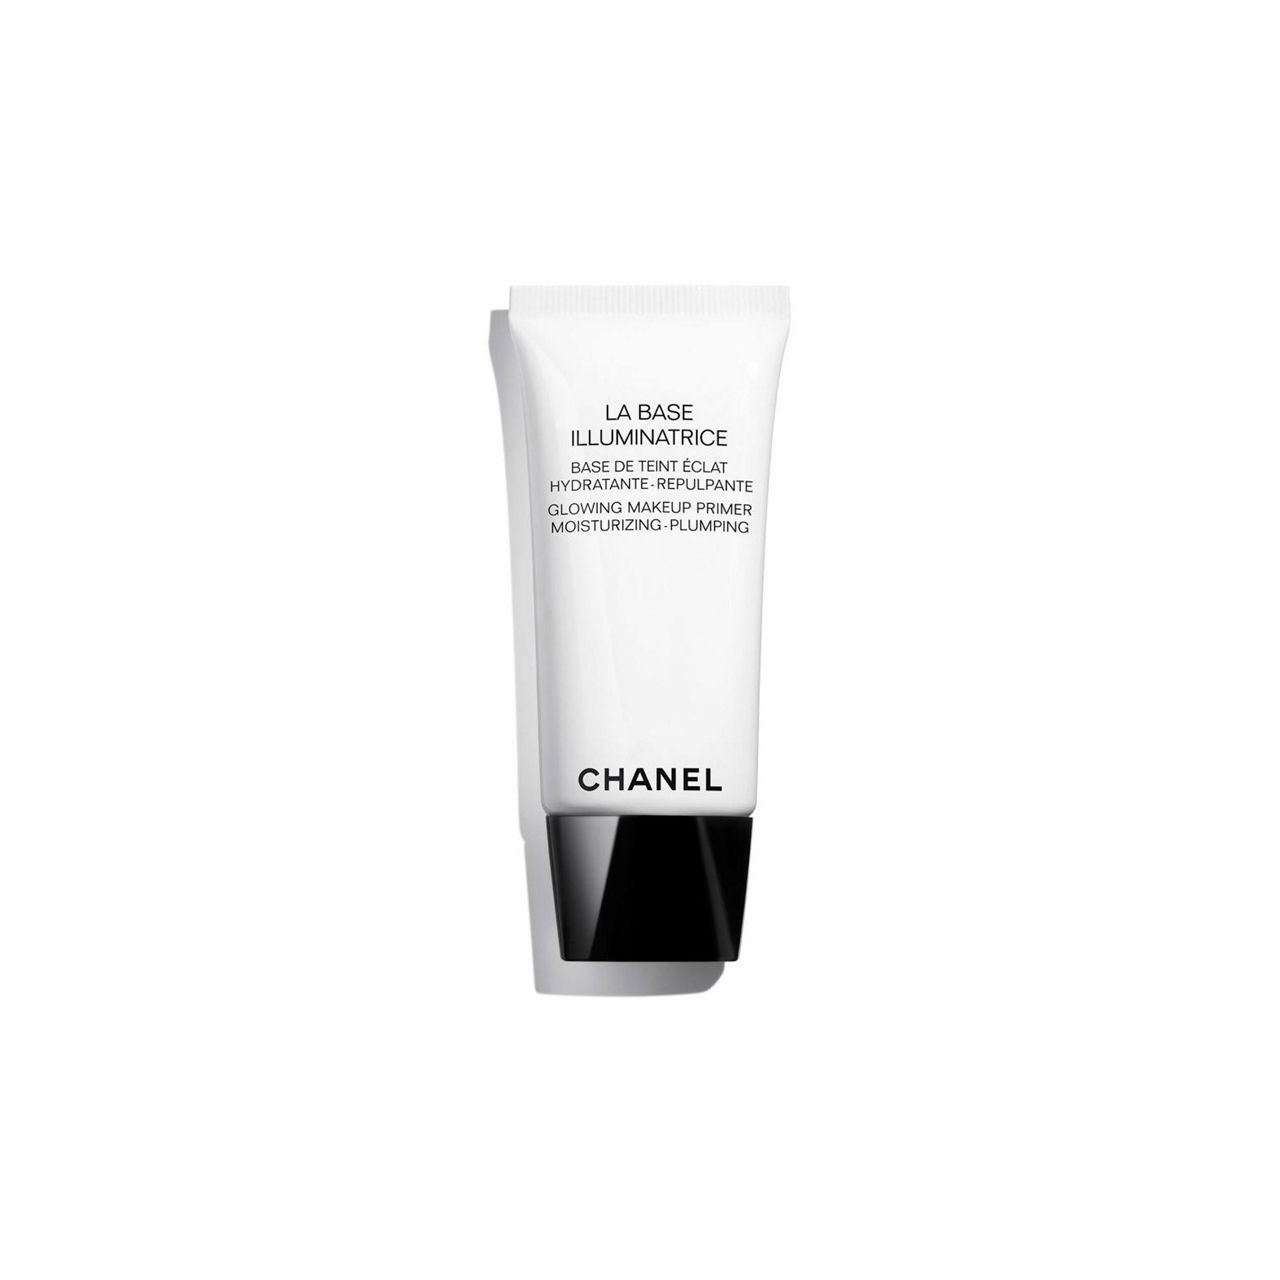 Chanel La Base Illuminatrice Glowing Makeup Primer Moisturising-Plumping